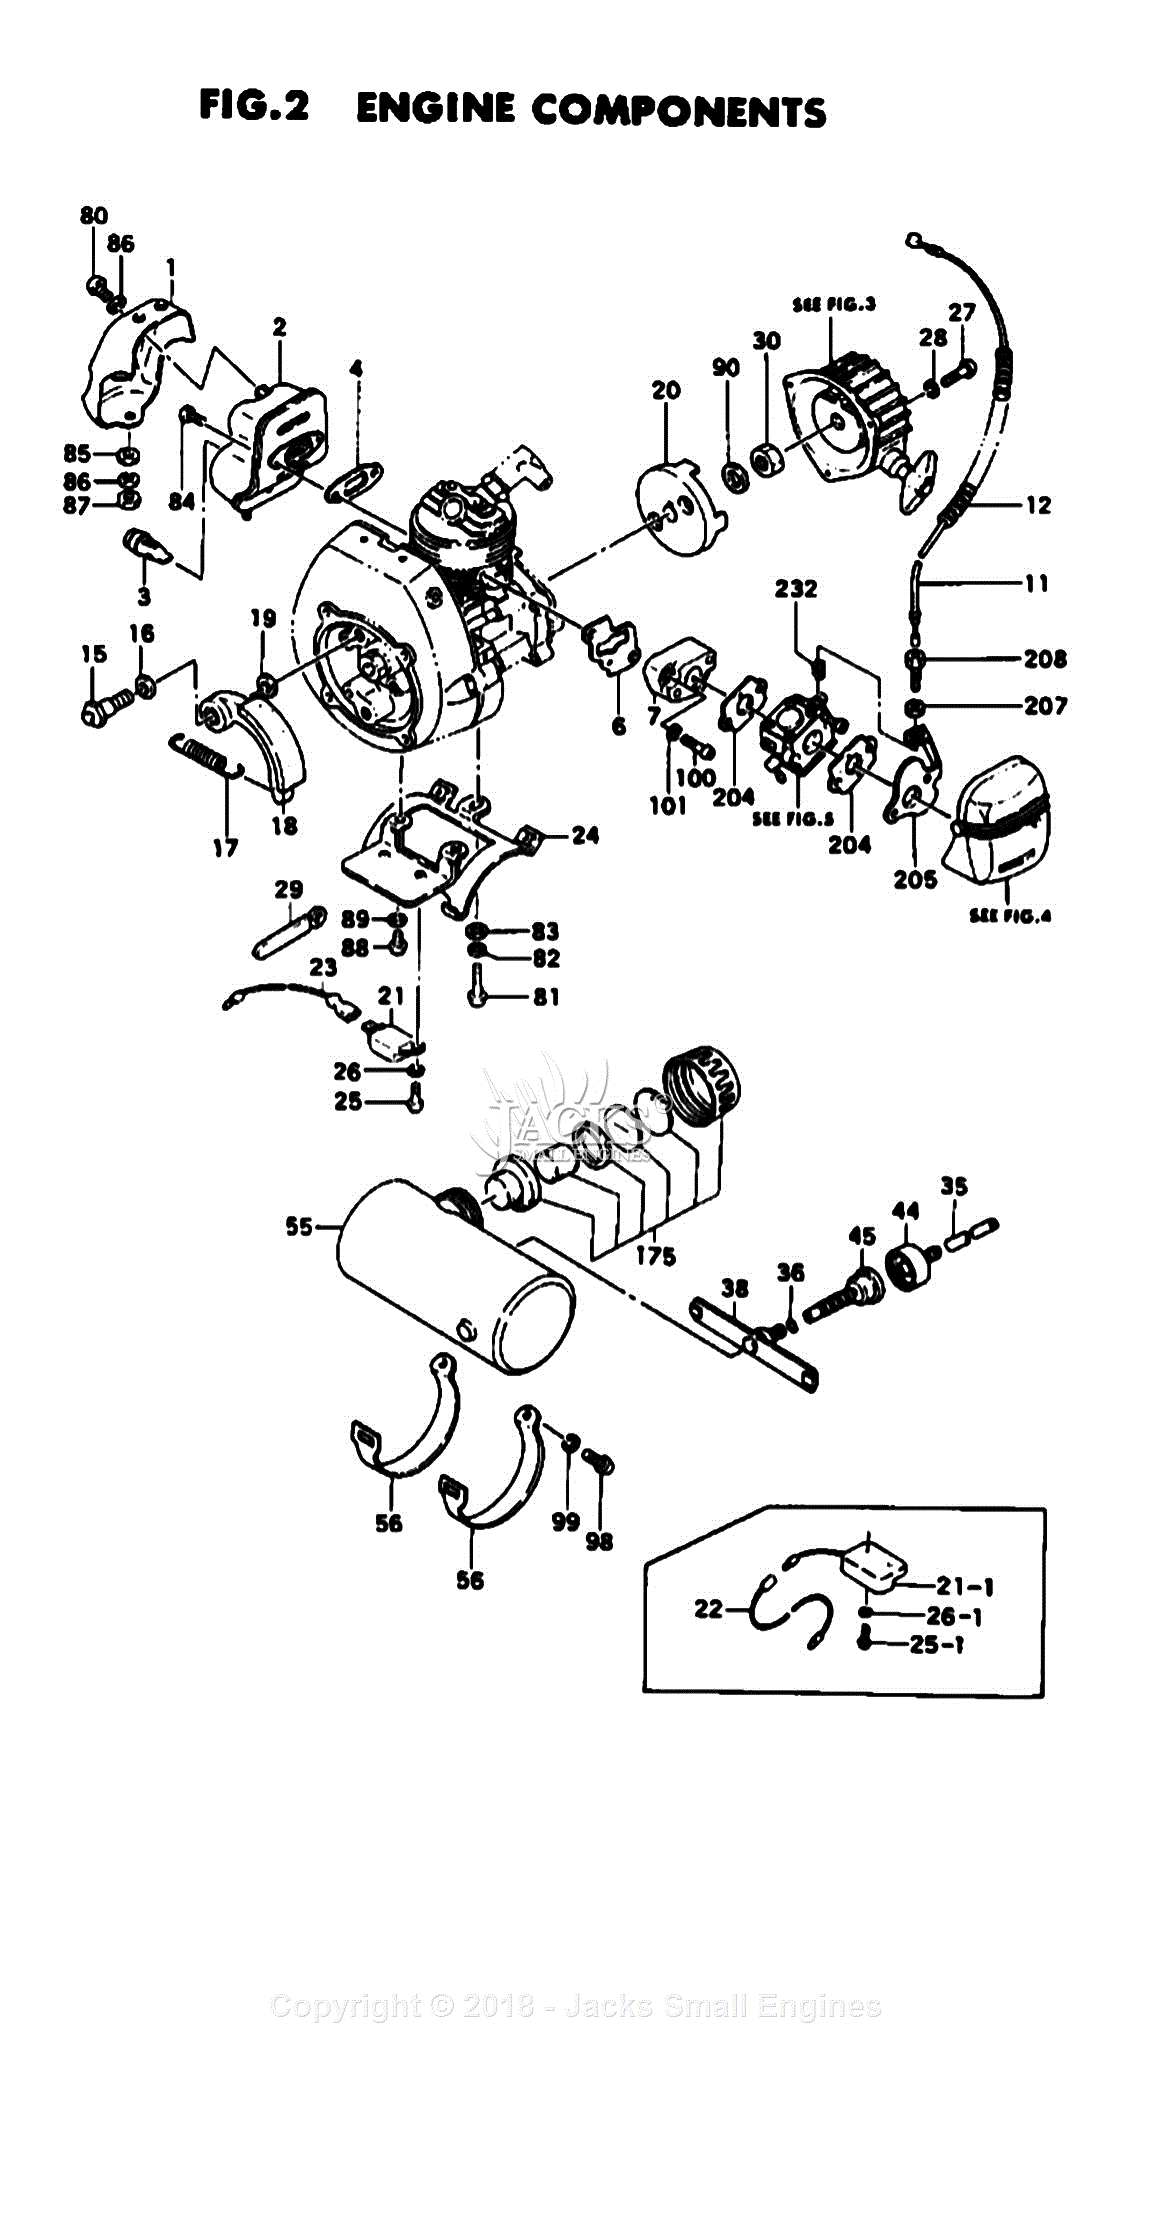 305 Engine Diagram - I have a 1992 Camero RS, 305 engine. I replaced